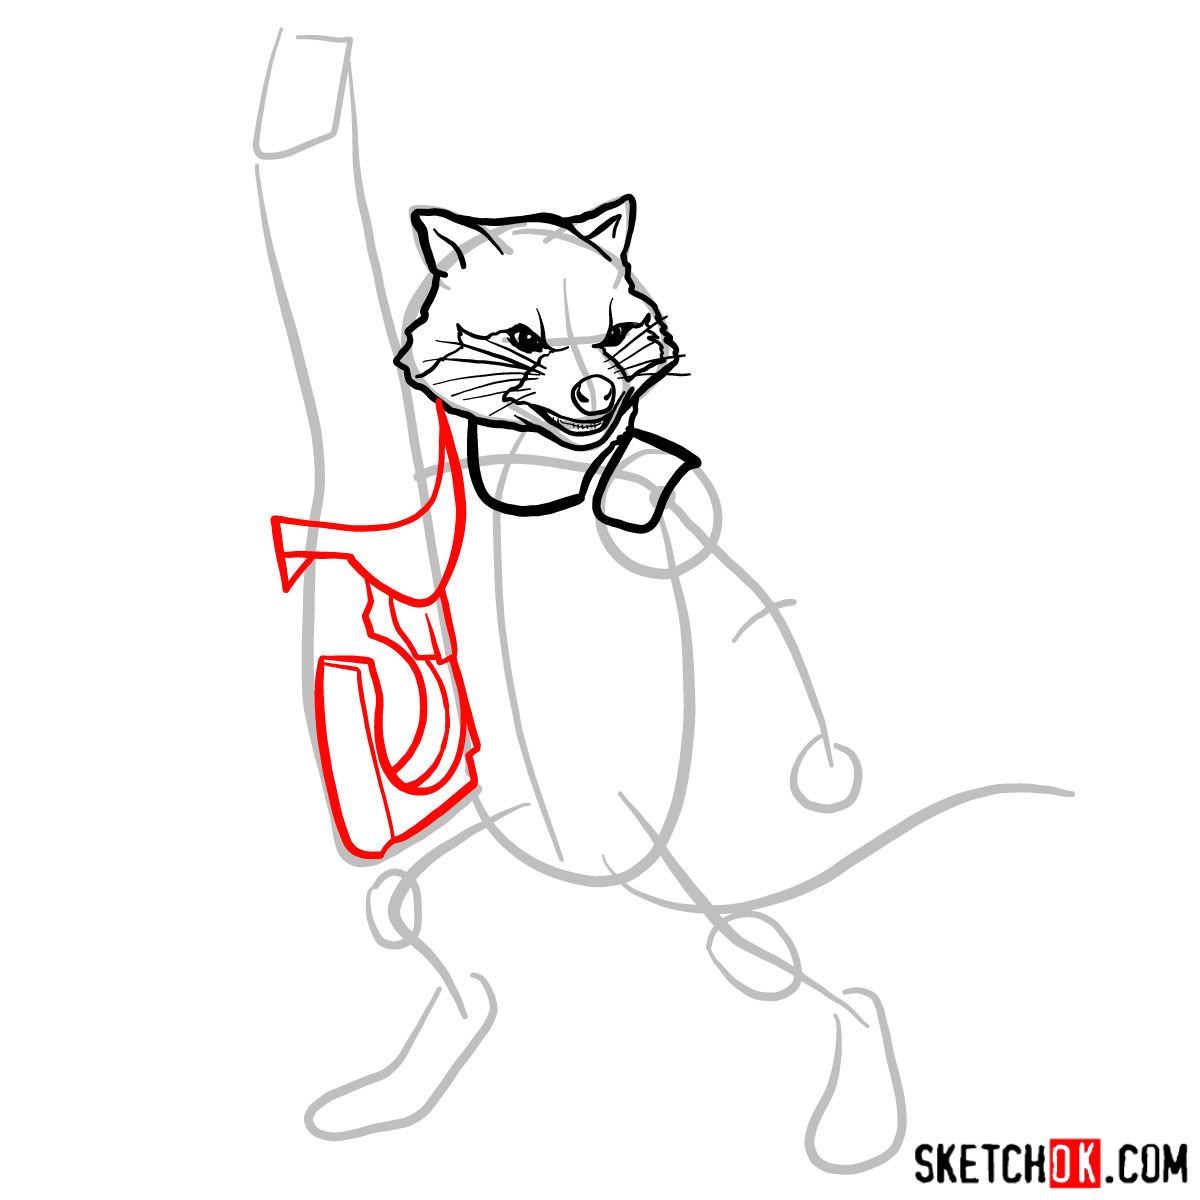 How to draw Rocket Raccoon - step 06